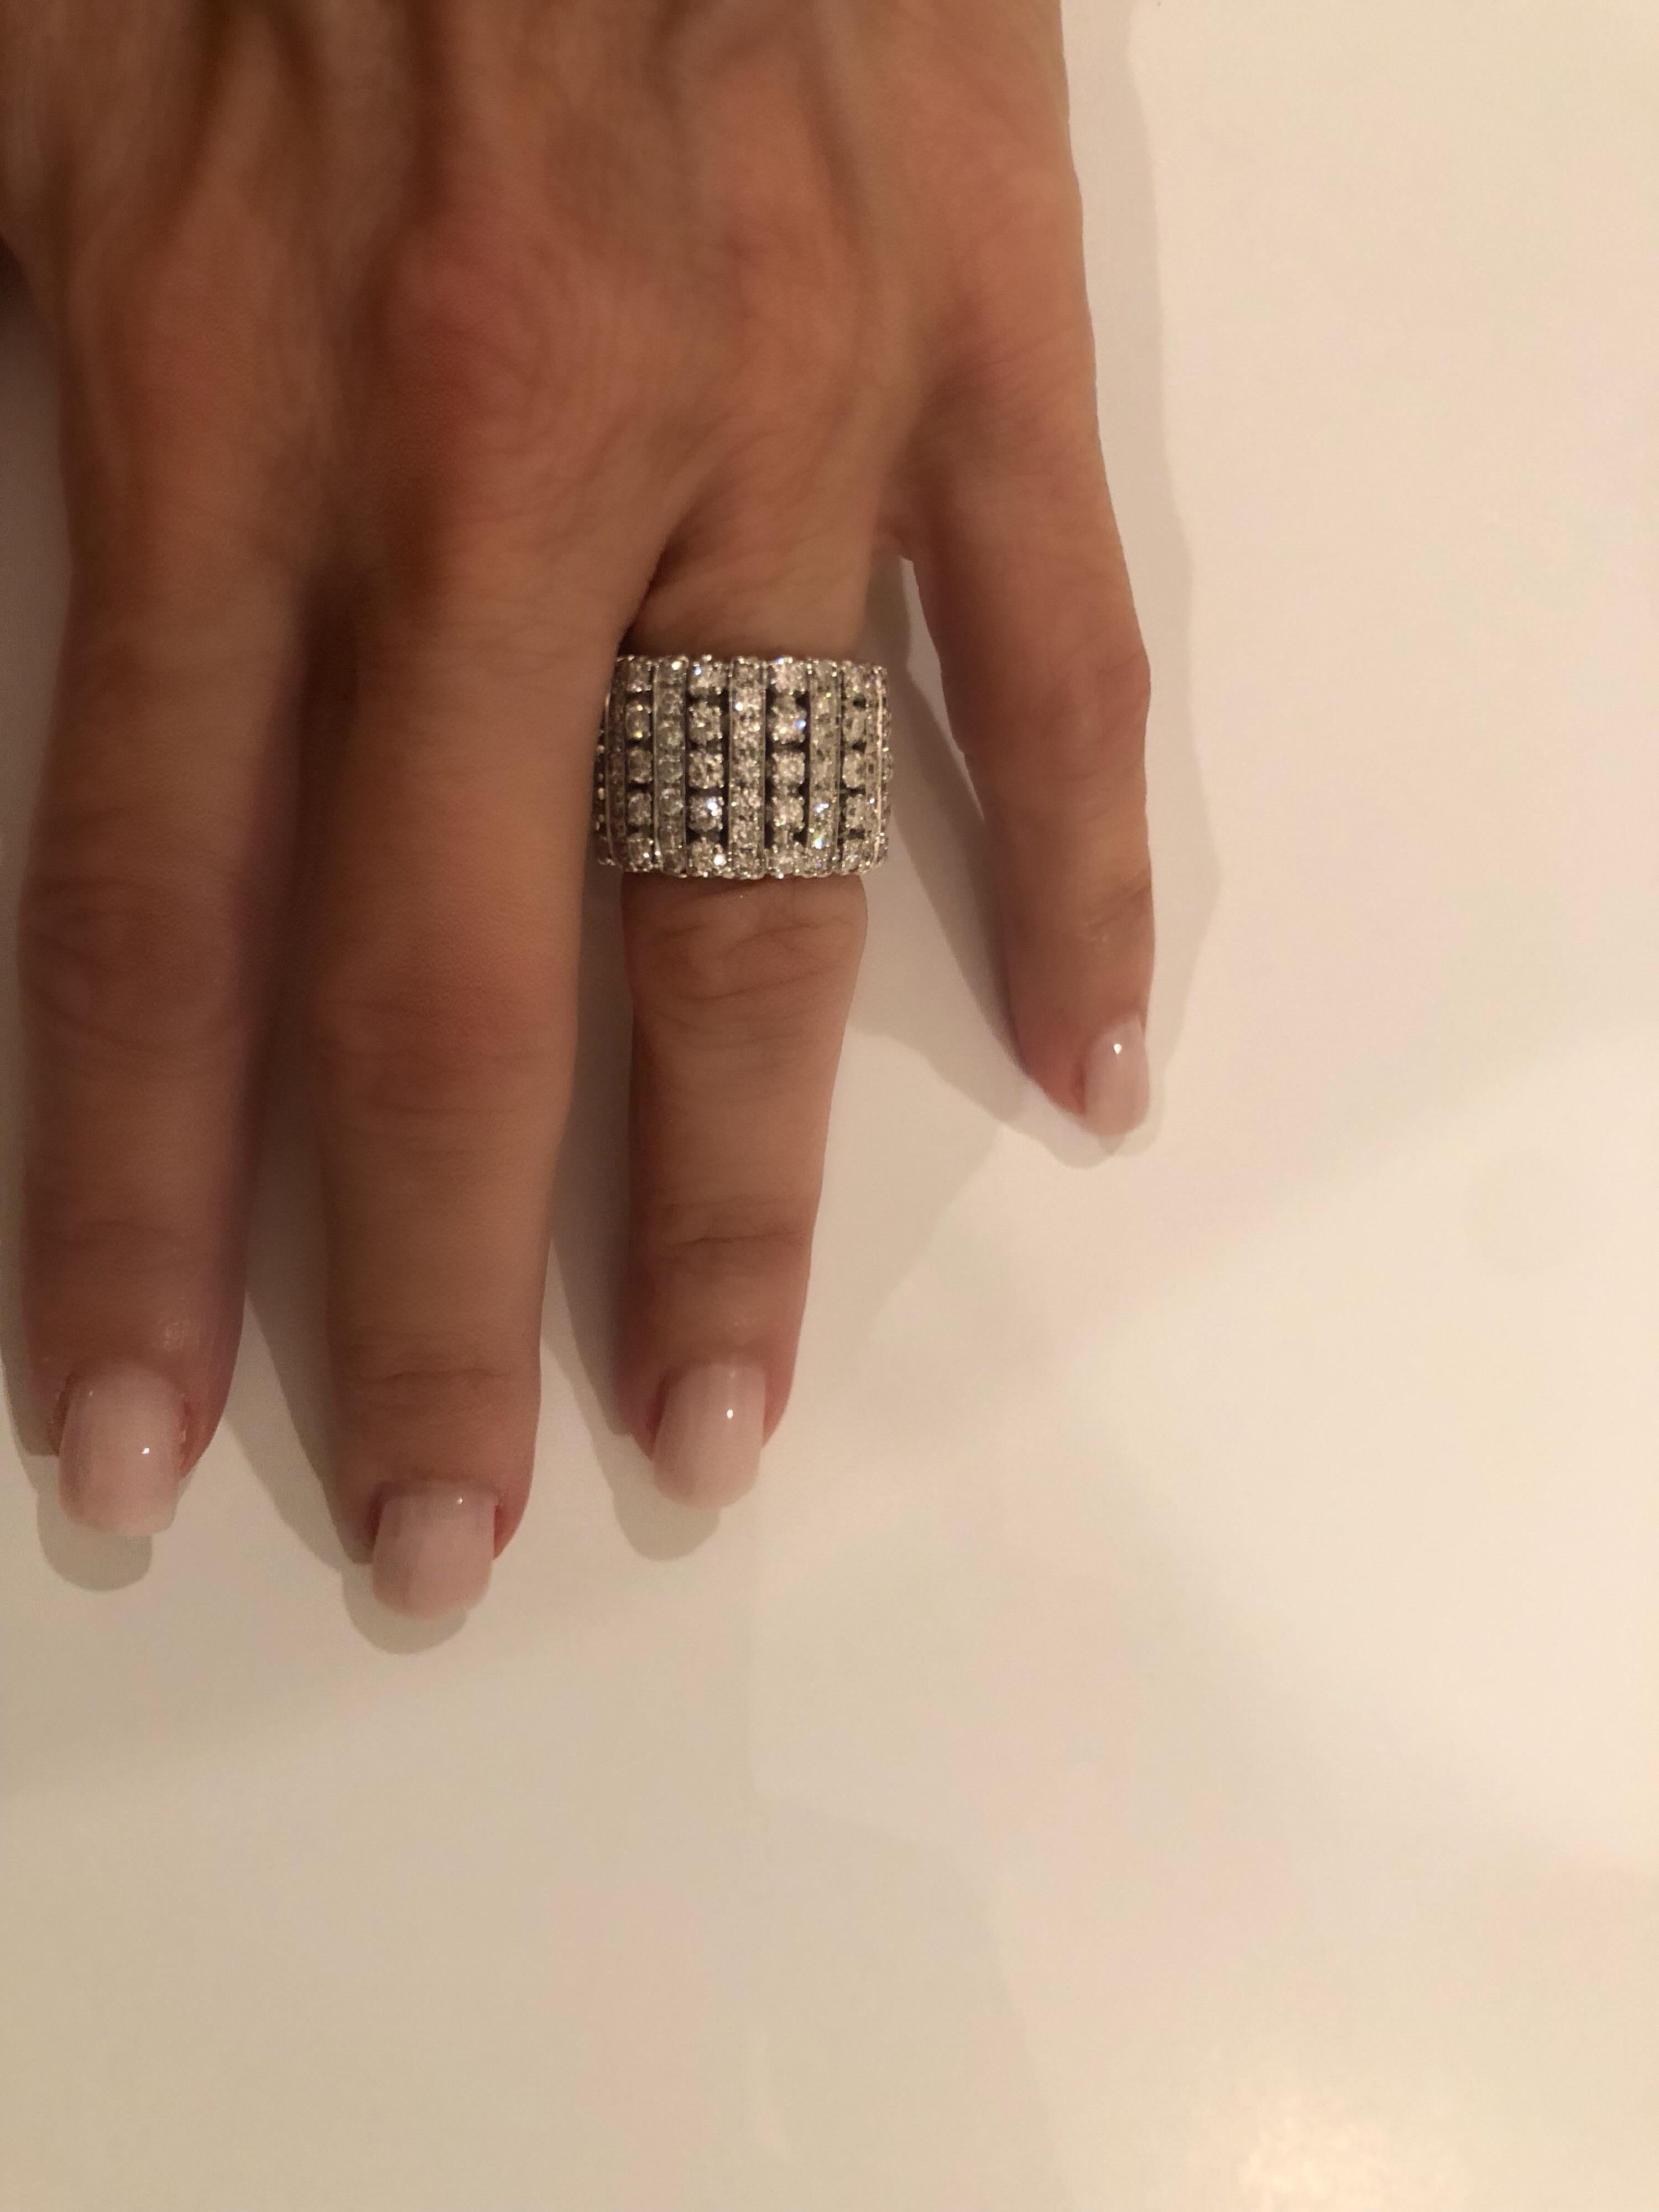 Stunning 18k white gold all diamond eternity band,
approximately 4+ carat G-H , VS1-VS2 diamonds. 
A true statement- 